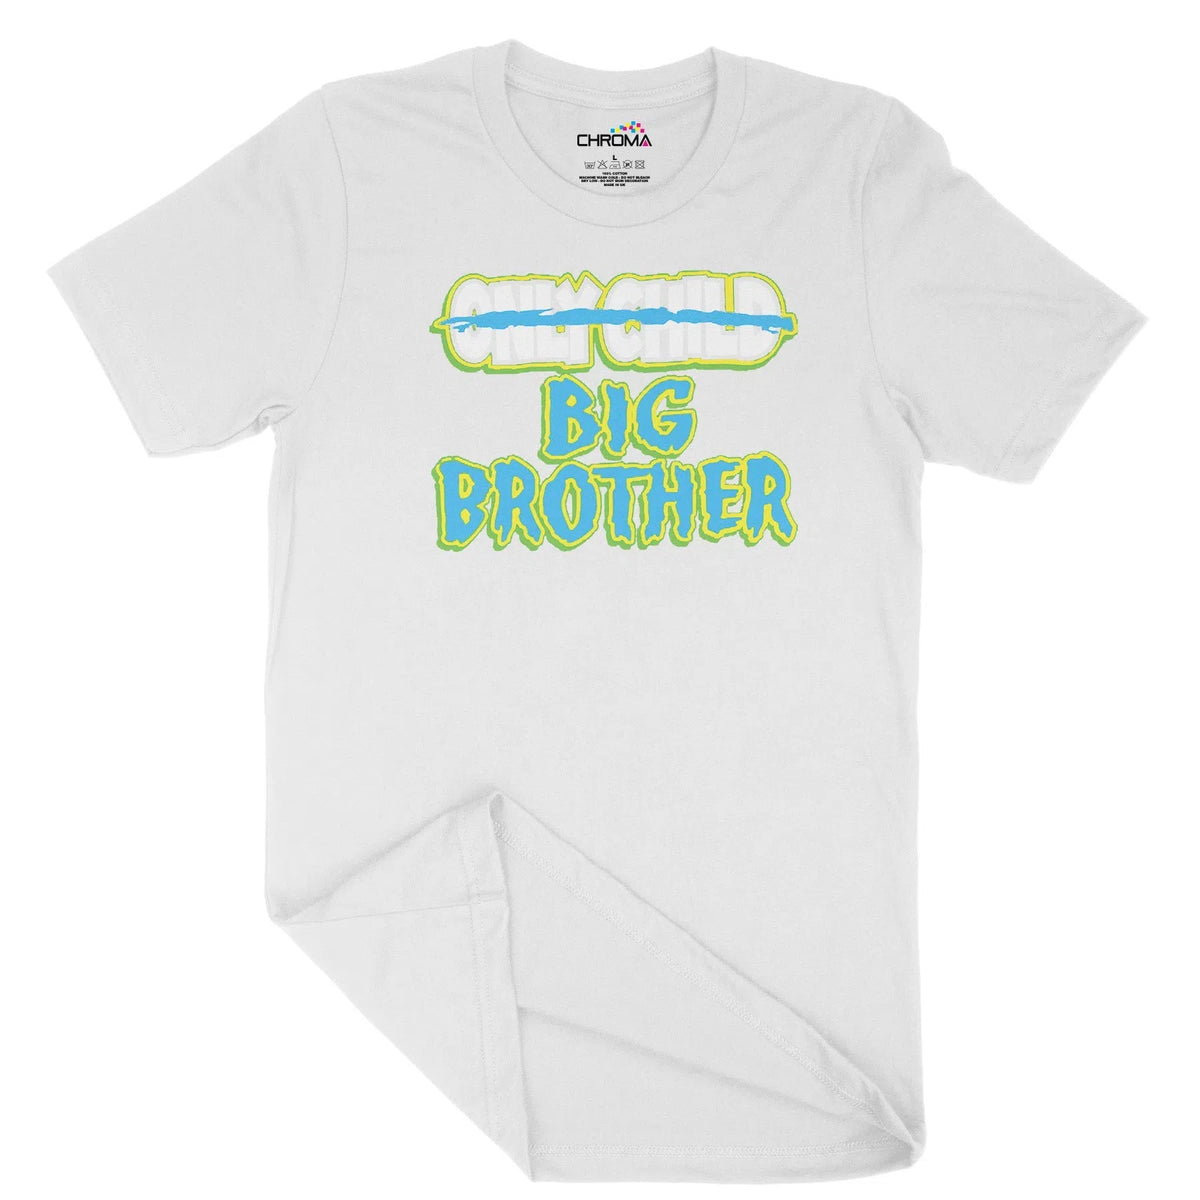 Only Child Big Brother Unisex Adult T-Shirt | Quality Slogan Clothing Chroma Clothing